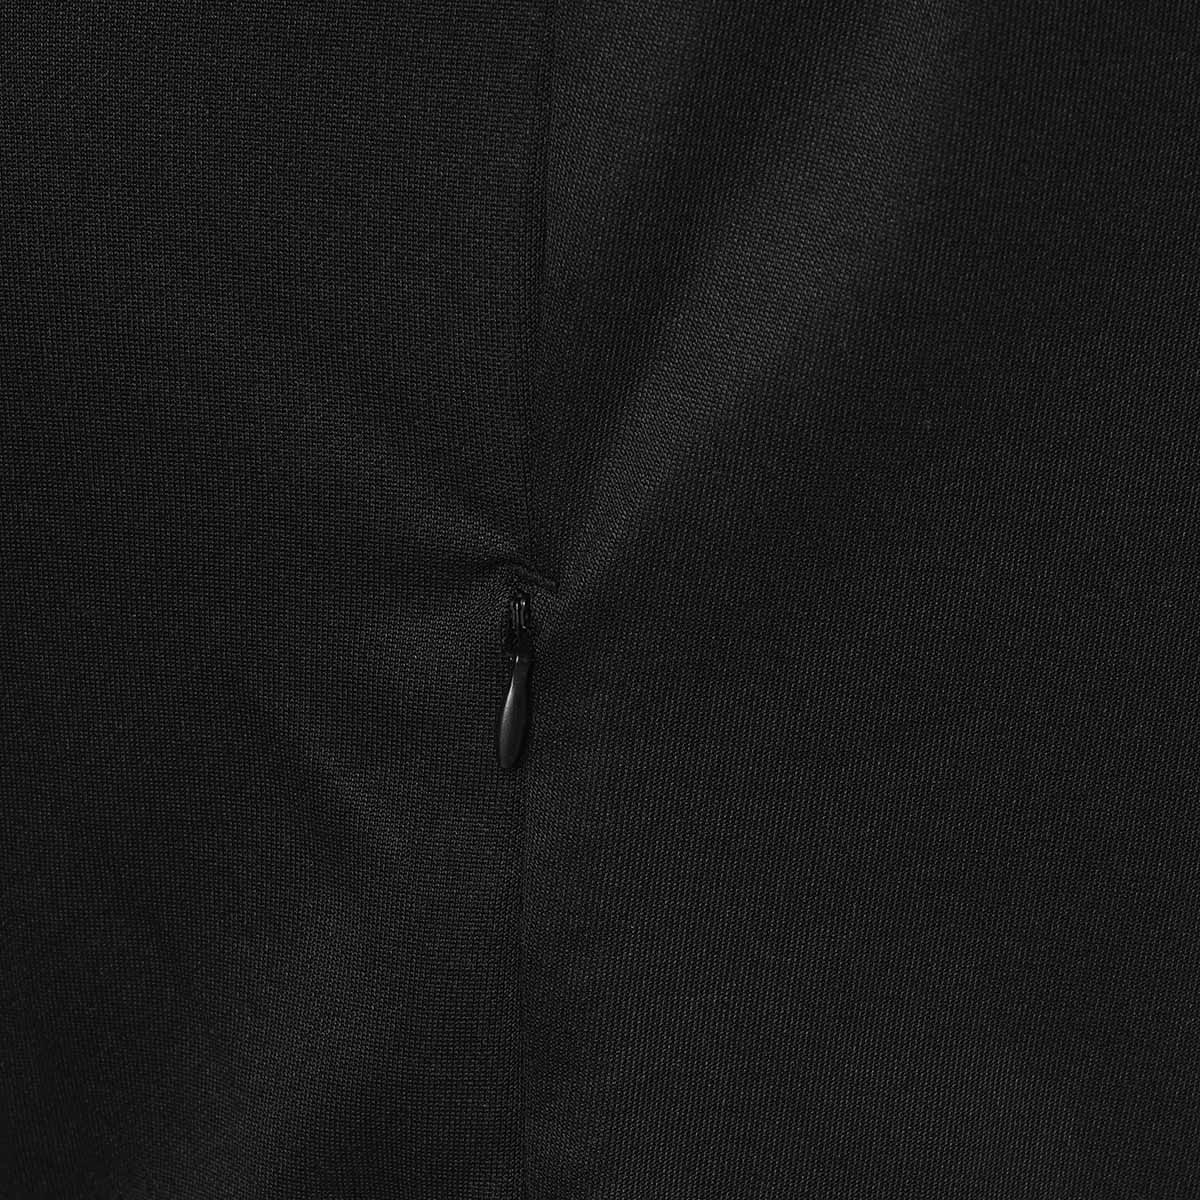 Pantalon homme Kouros Sportswear Noir